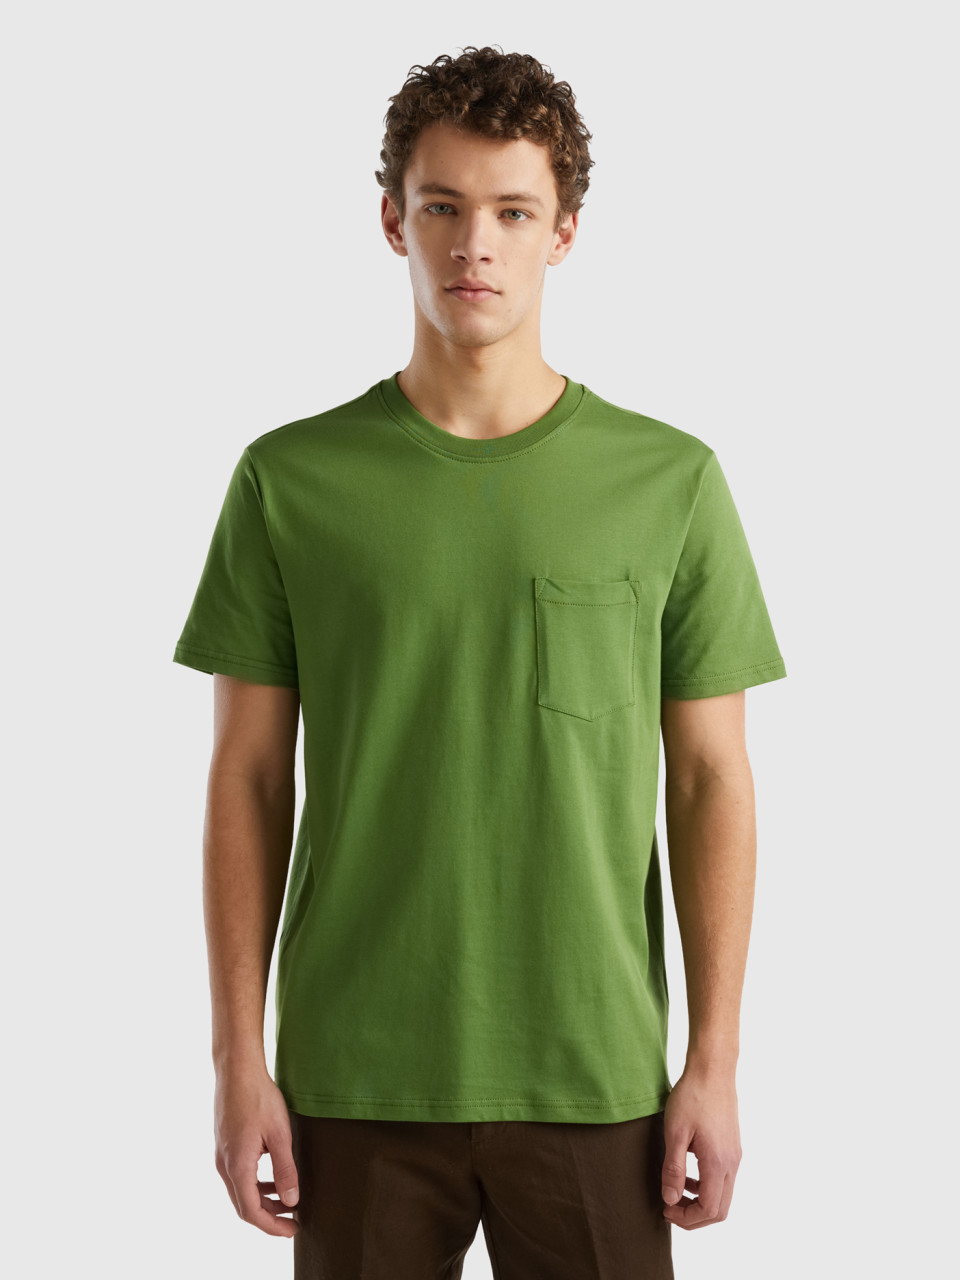 Benetton, 100% Cotton T-shirt With Pocket, Military Green, Men